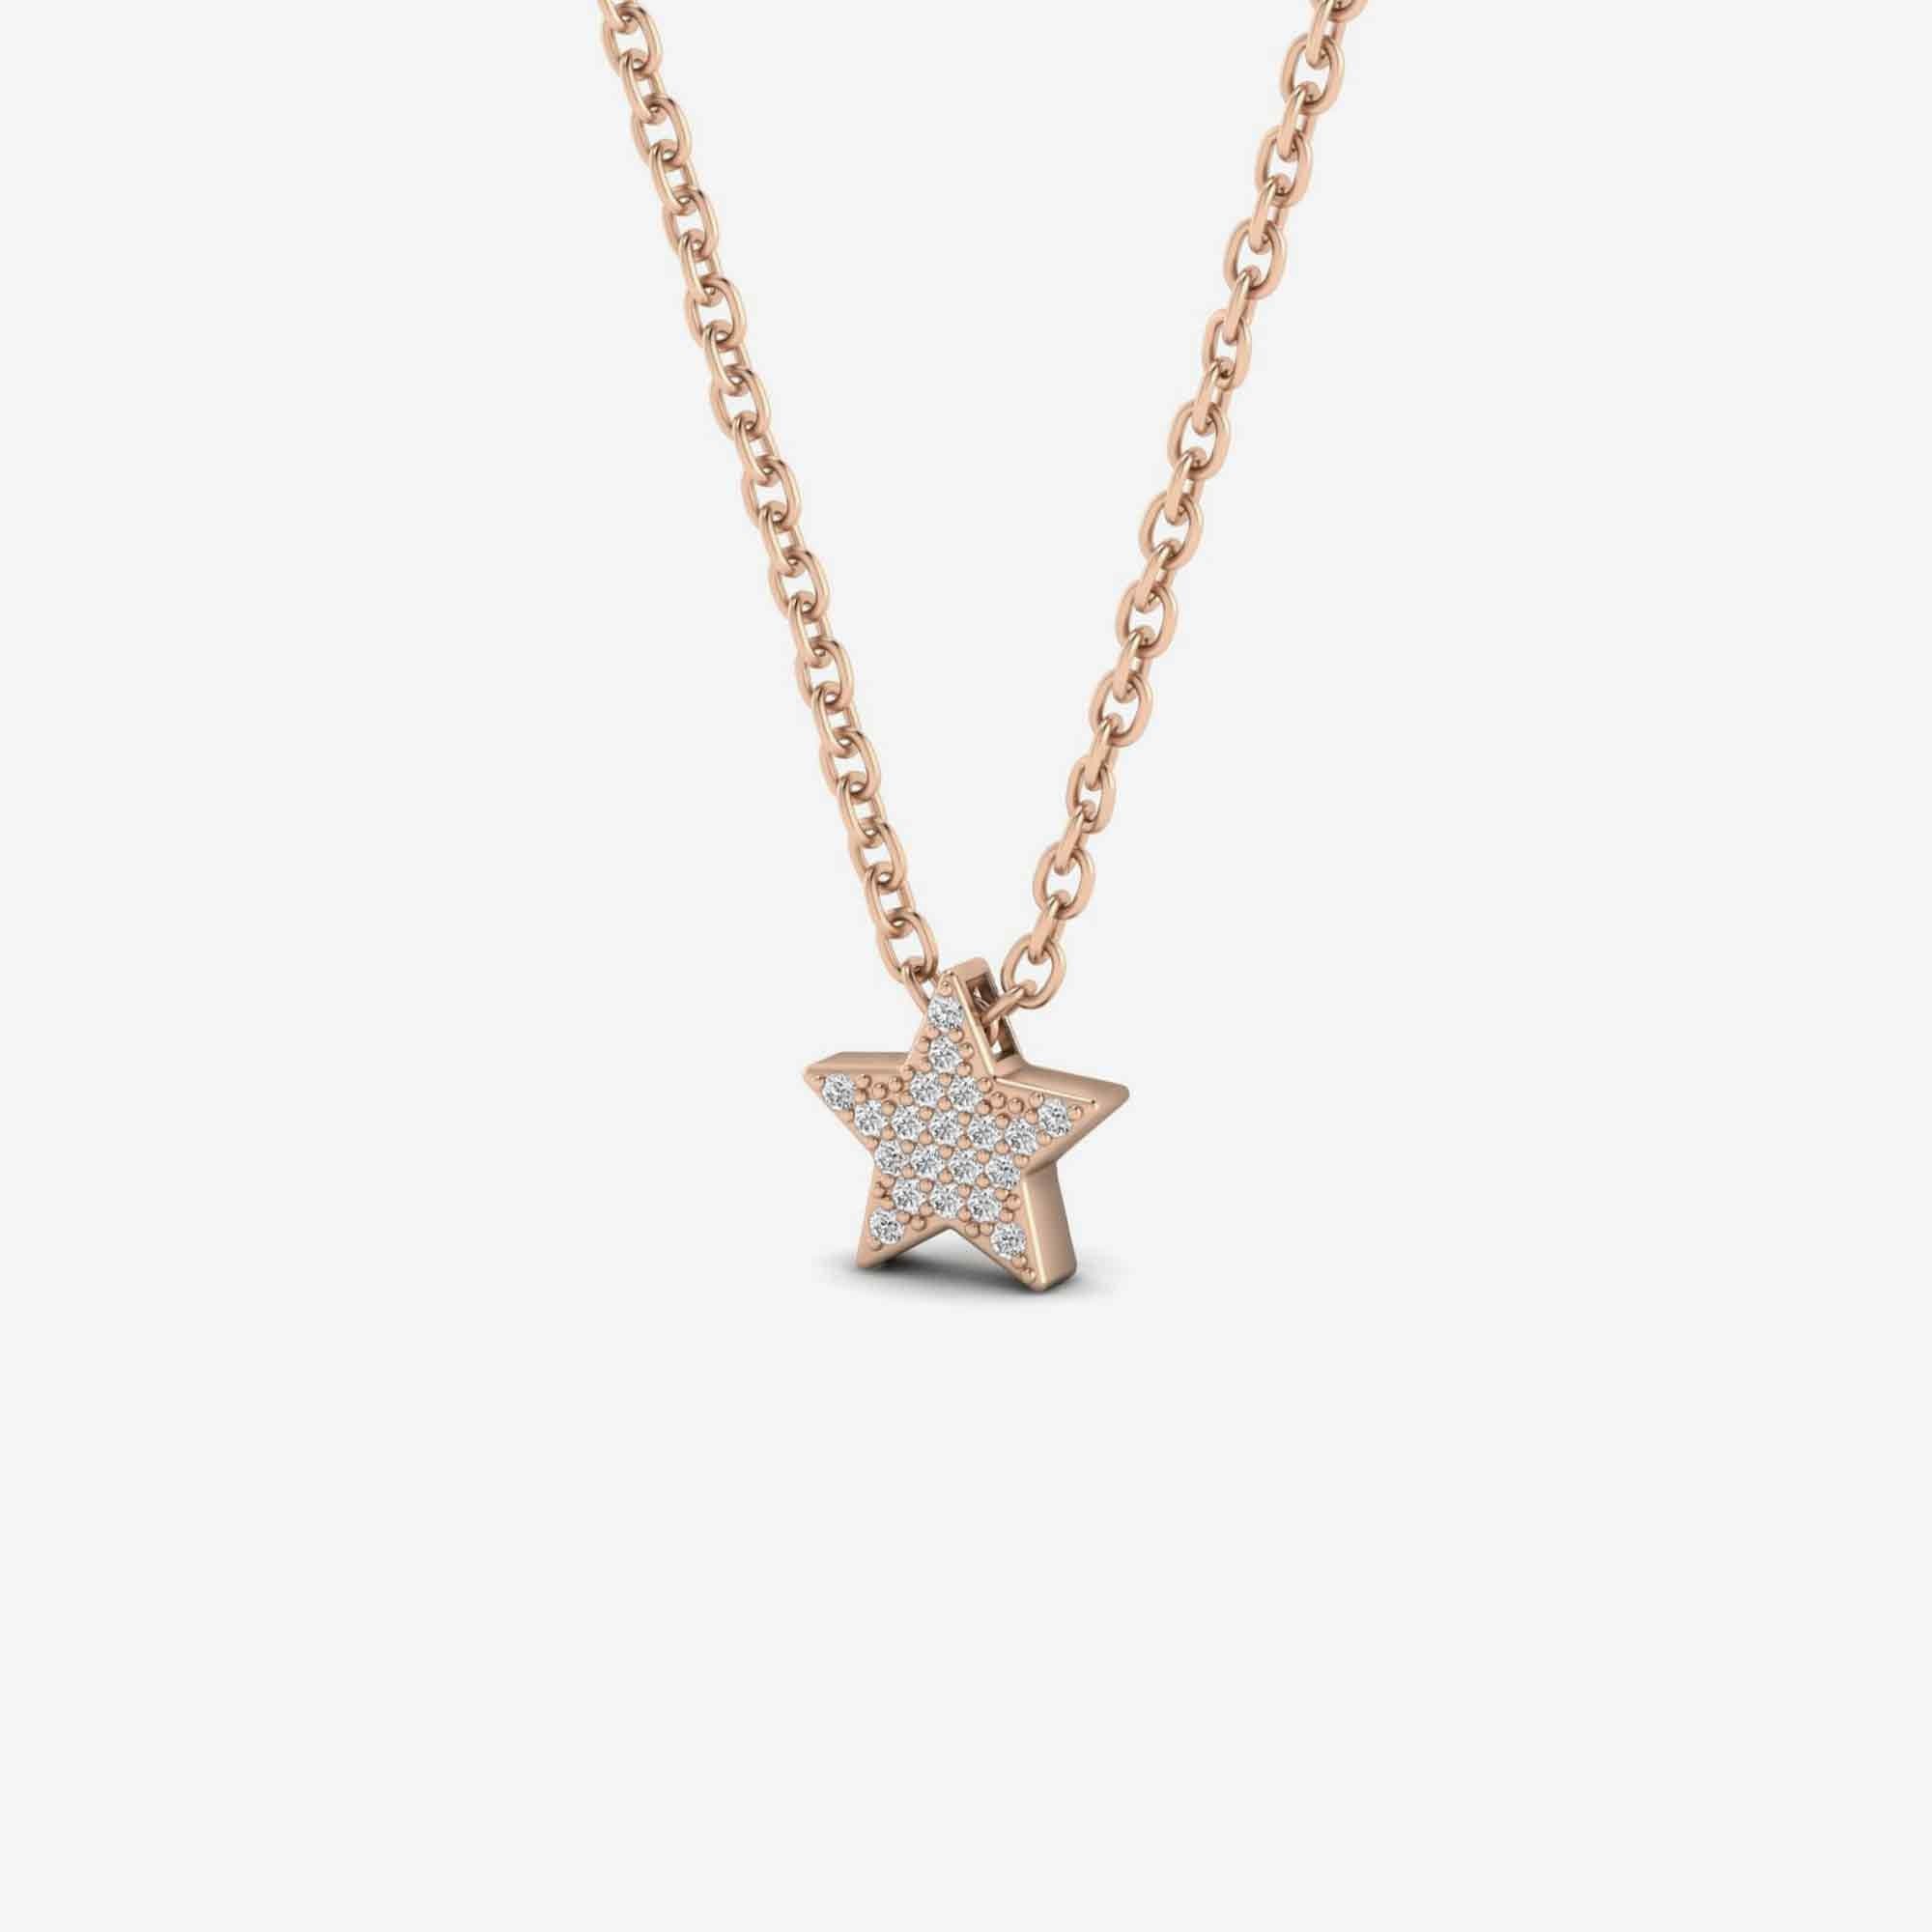 Diamond Star Necklace in 14k Rose Gold